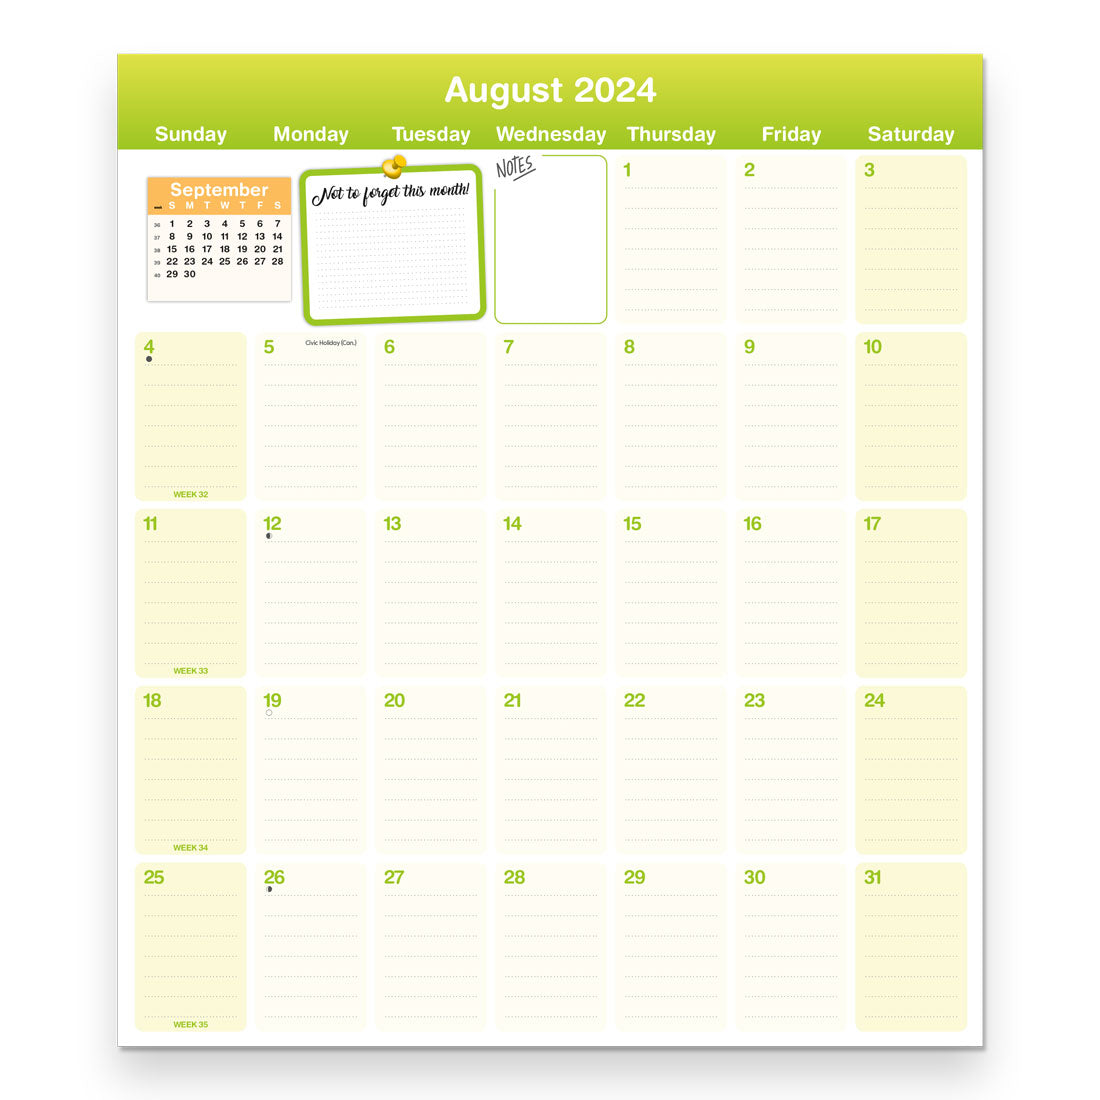 Fridgeplanner™ Monthly Magnet Calendar 2025 - English, C174110A